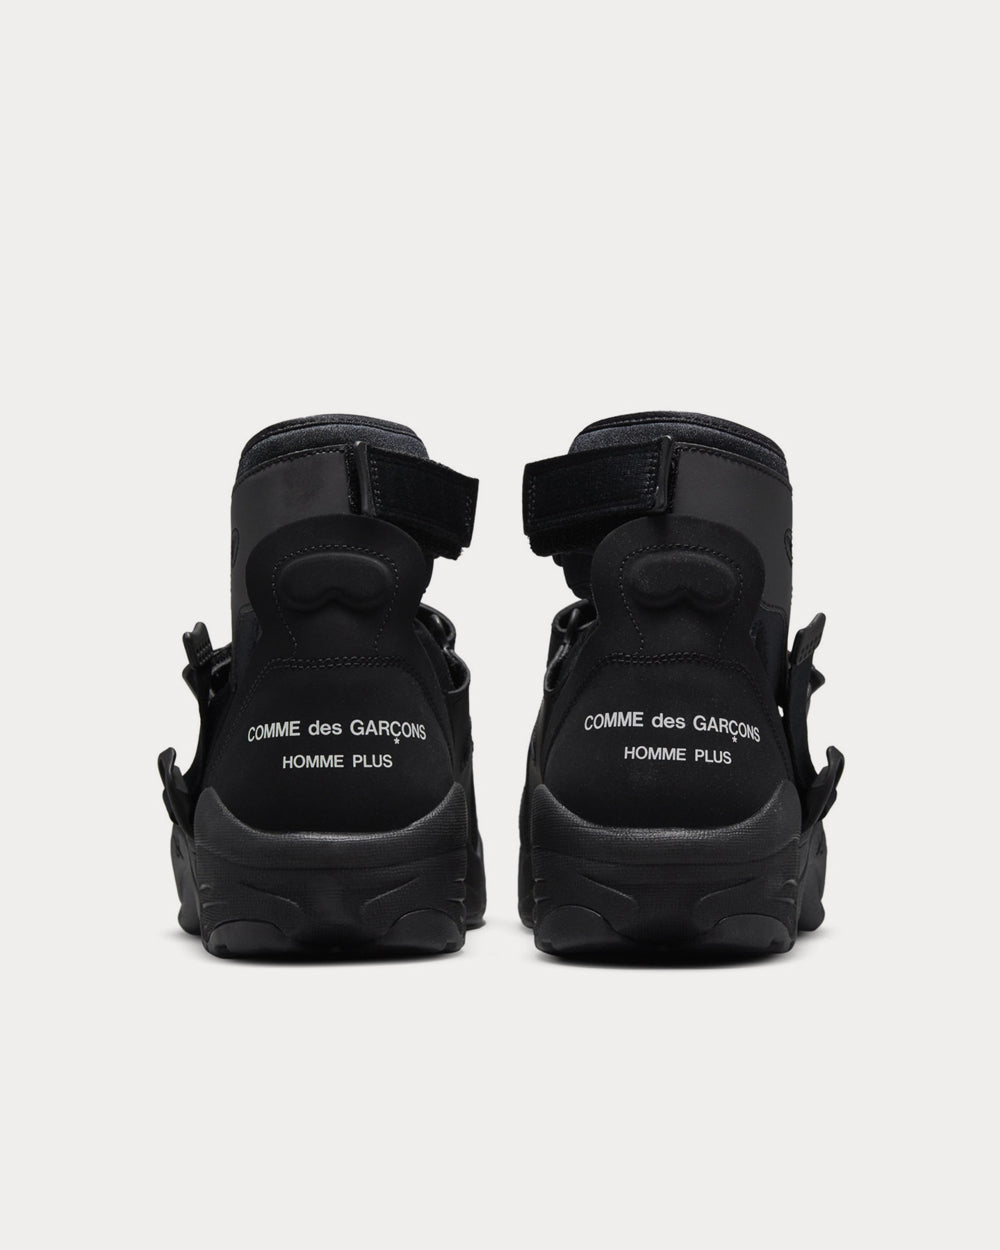 Nike x Comme des Garçons - Air Carnivore Black High Top Sneakers